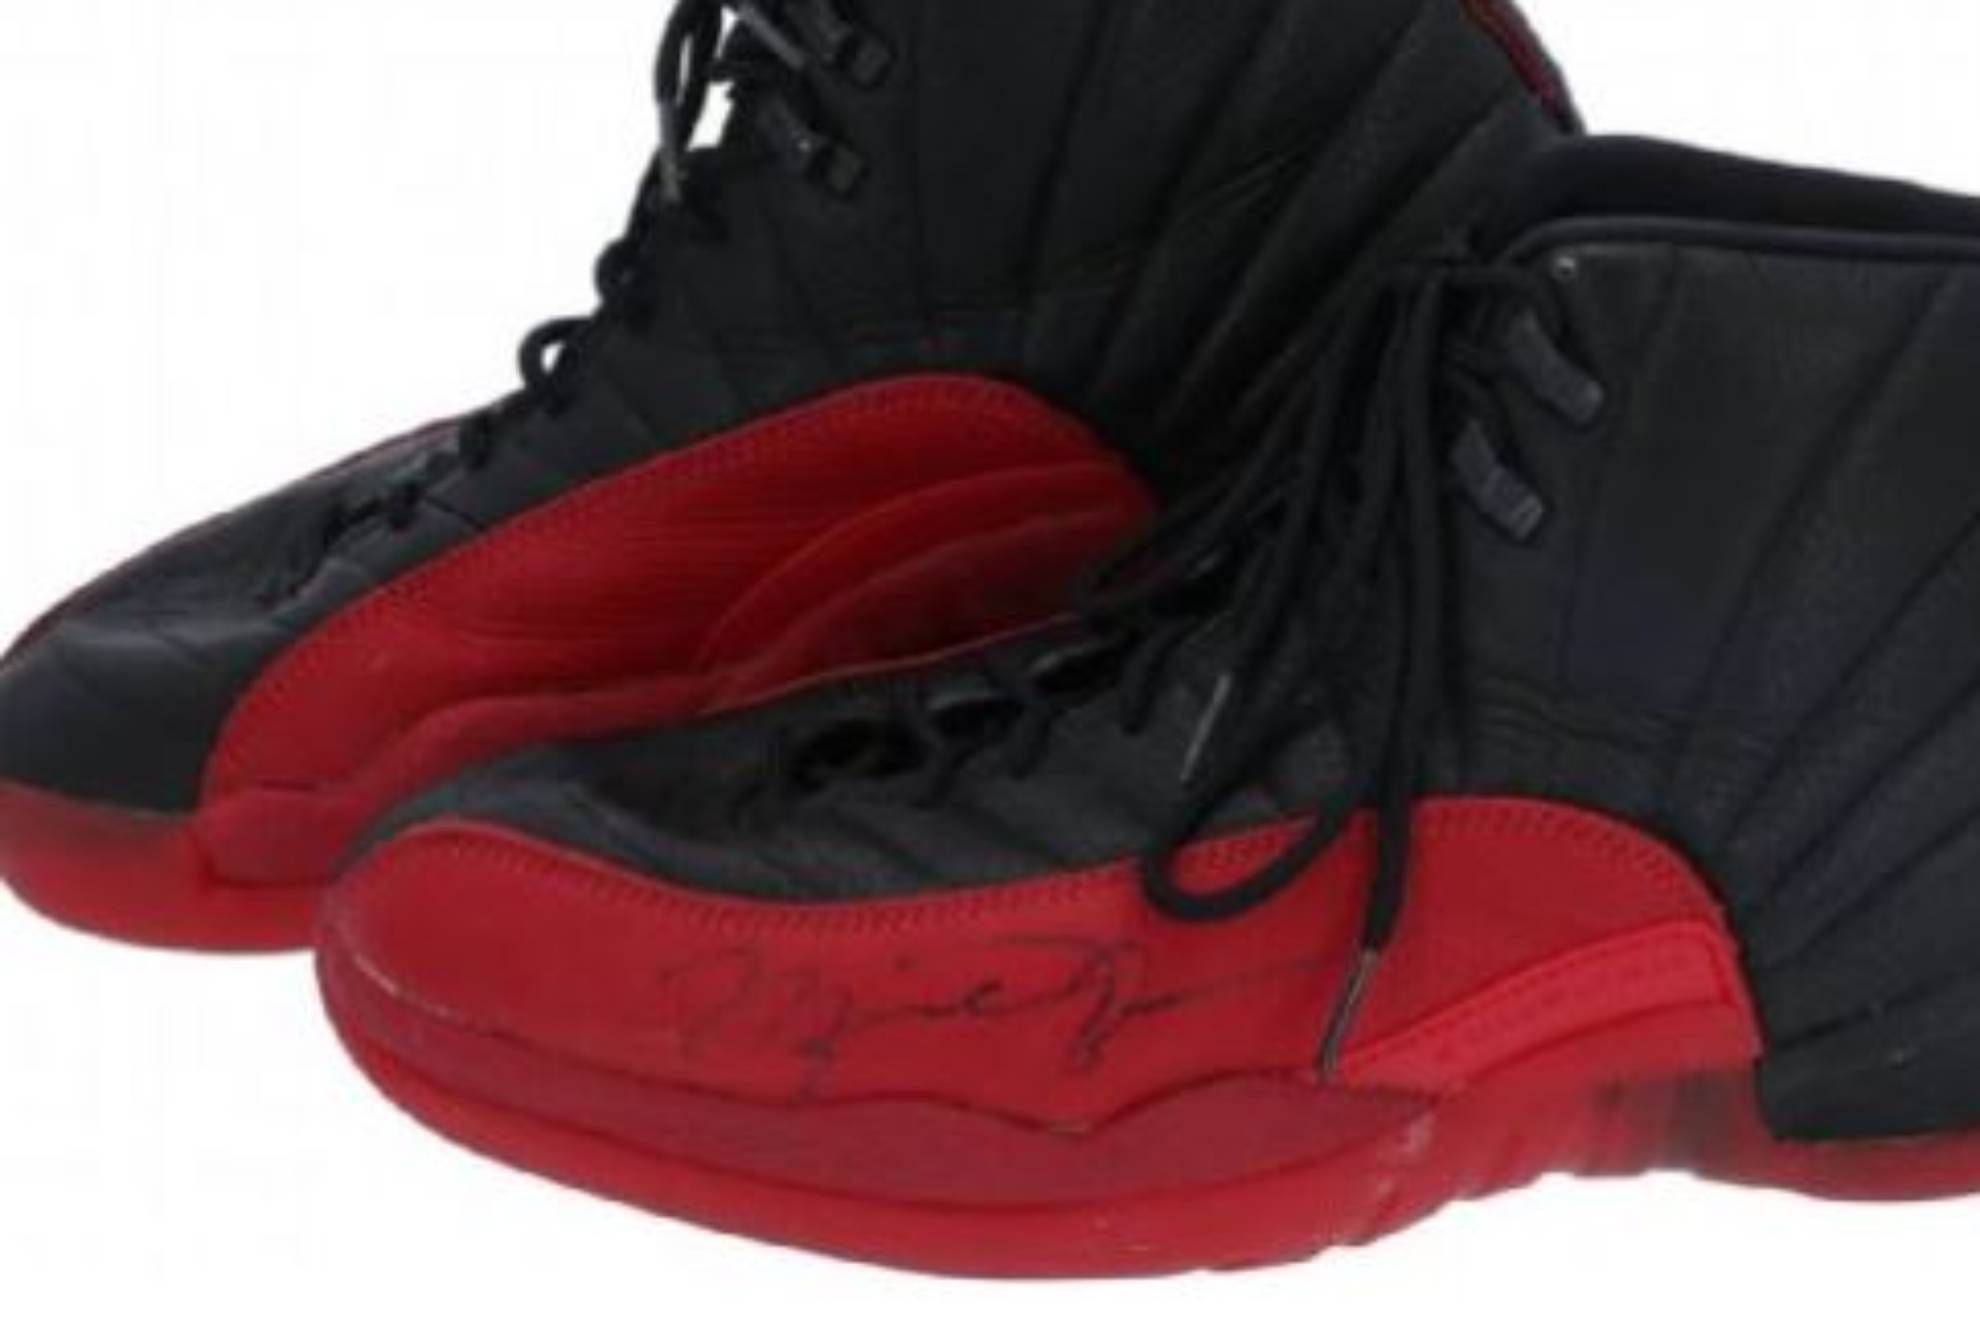 Michael Jordan's 'Flu Game' sneakers sold for 1.38 million dollars